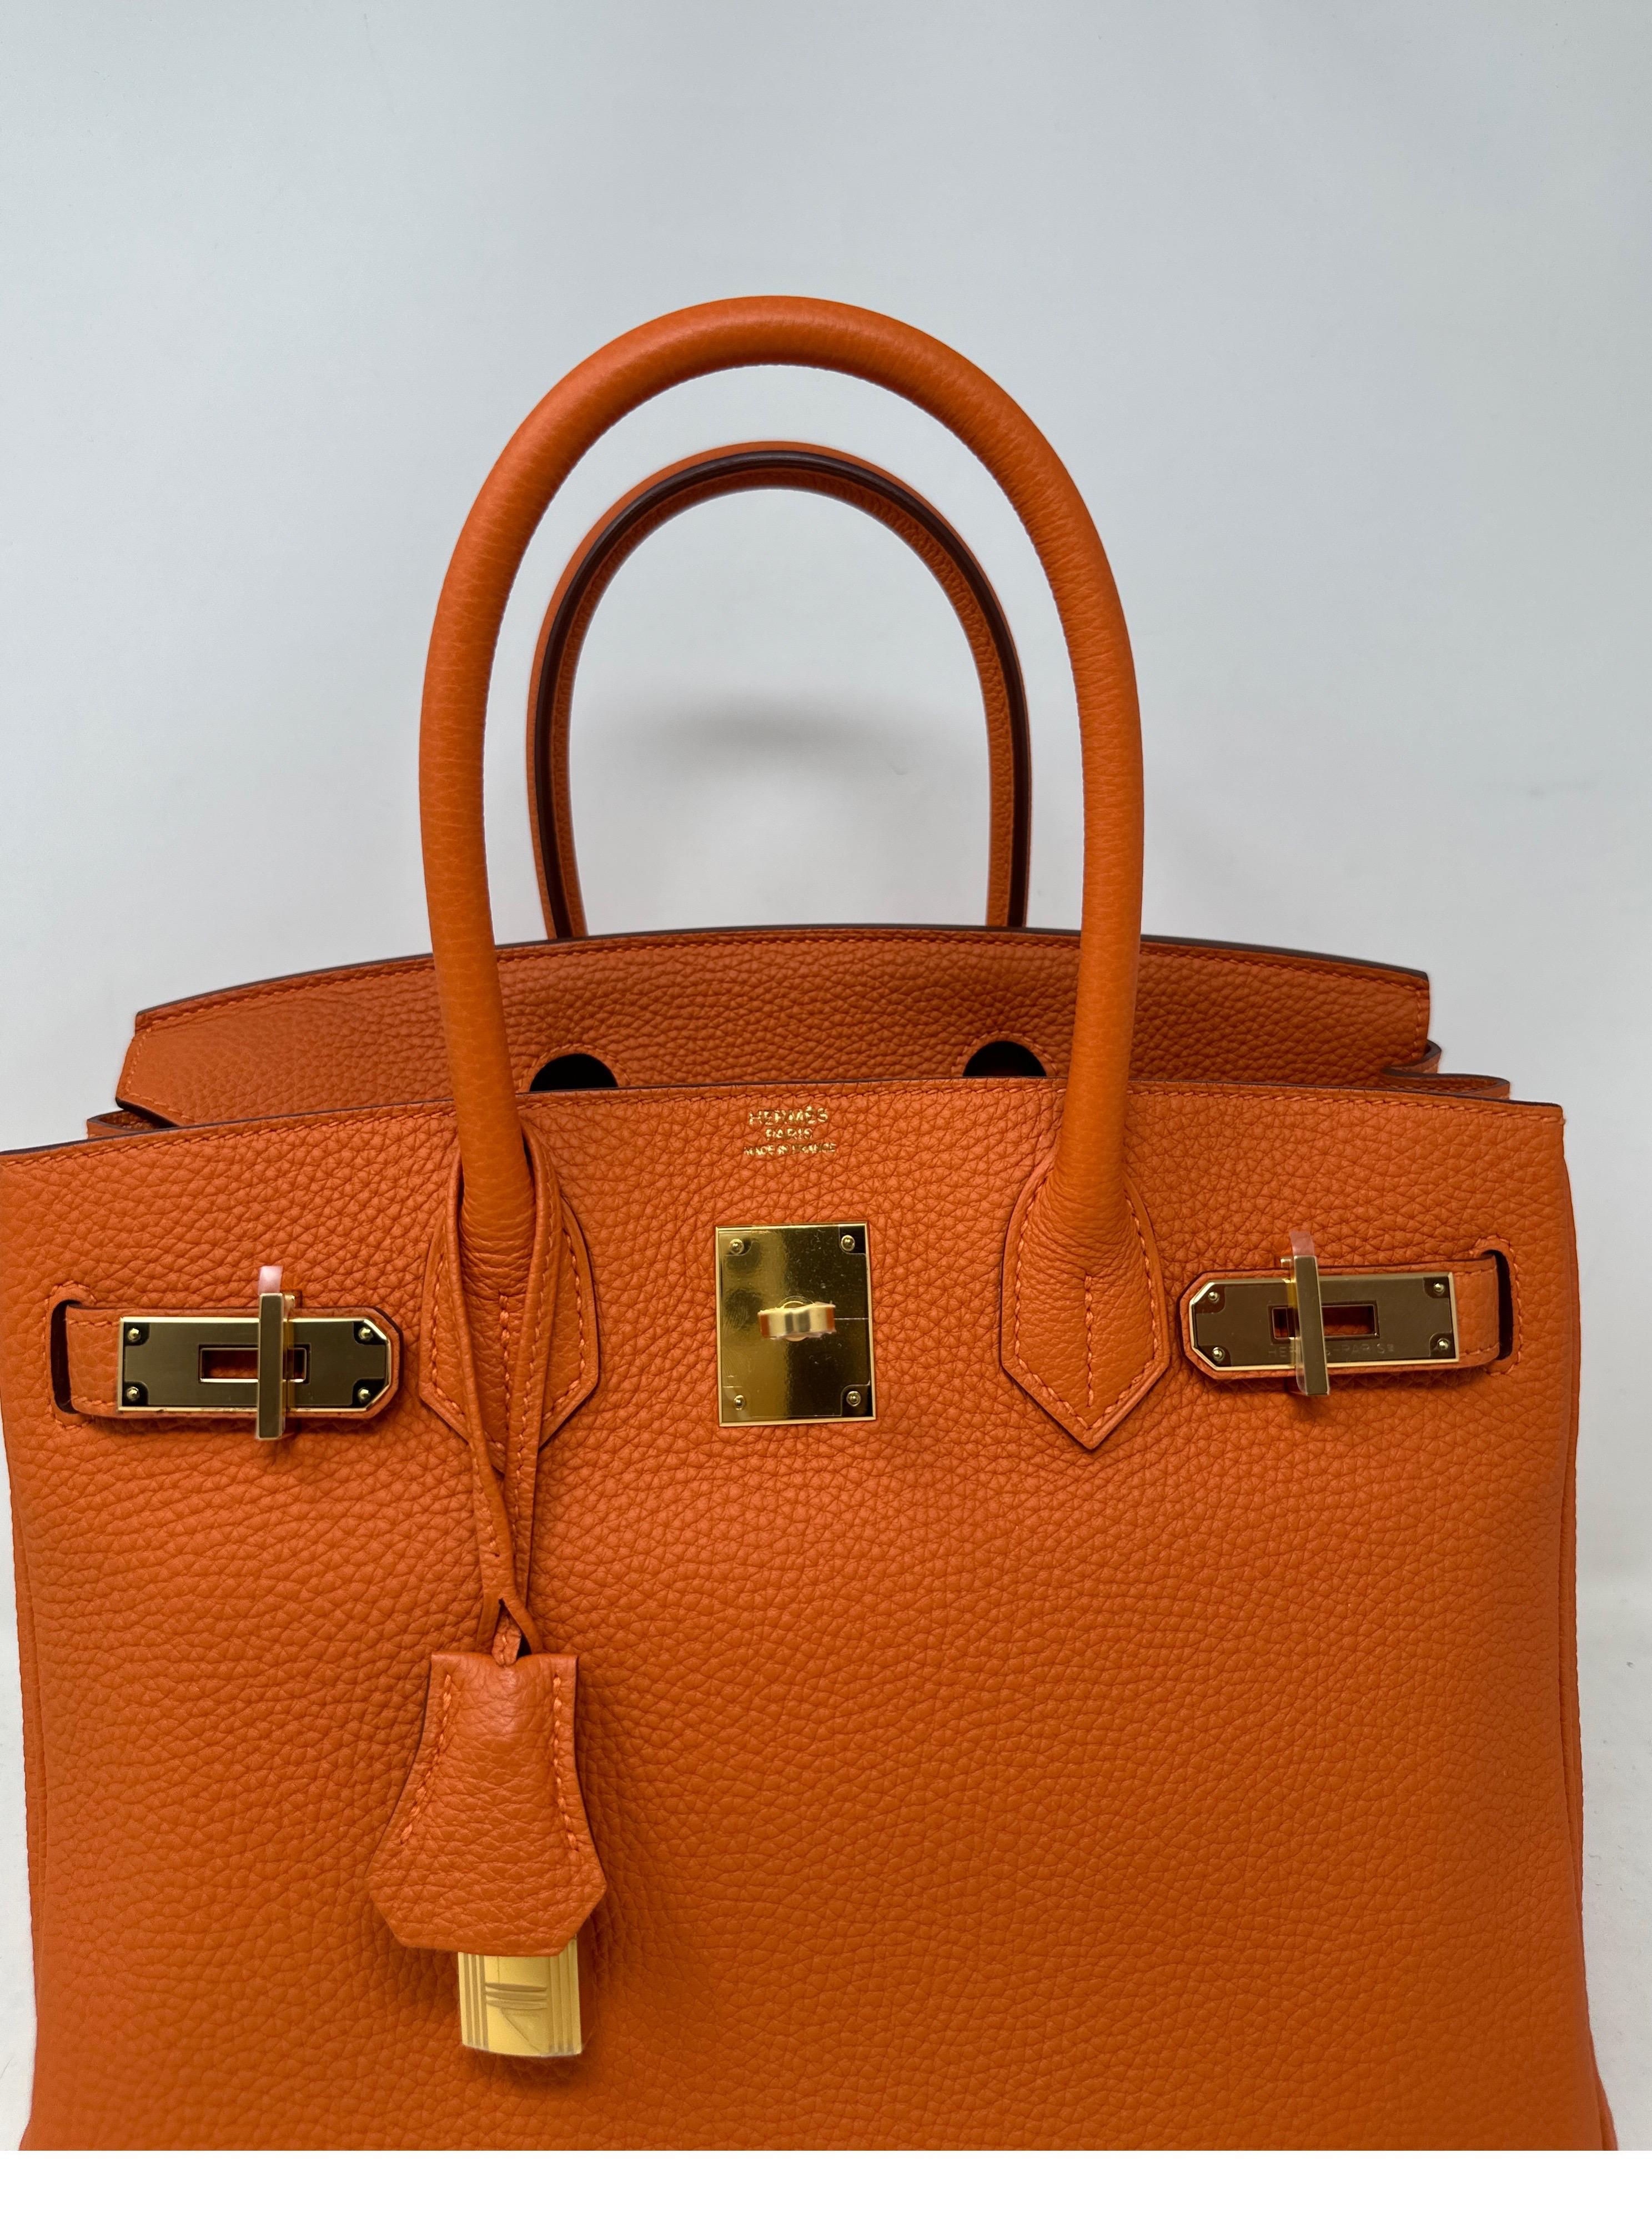 Hermes Orange Birkin 30 Bag  In Excellent Condition For Sale In Athens, GA